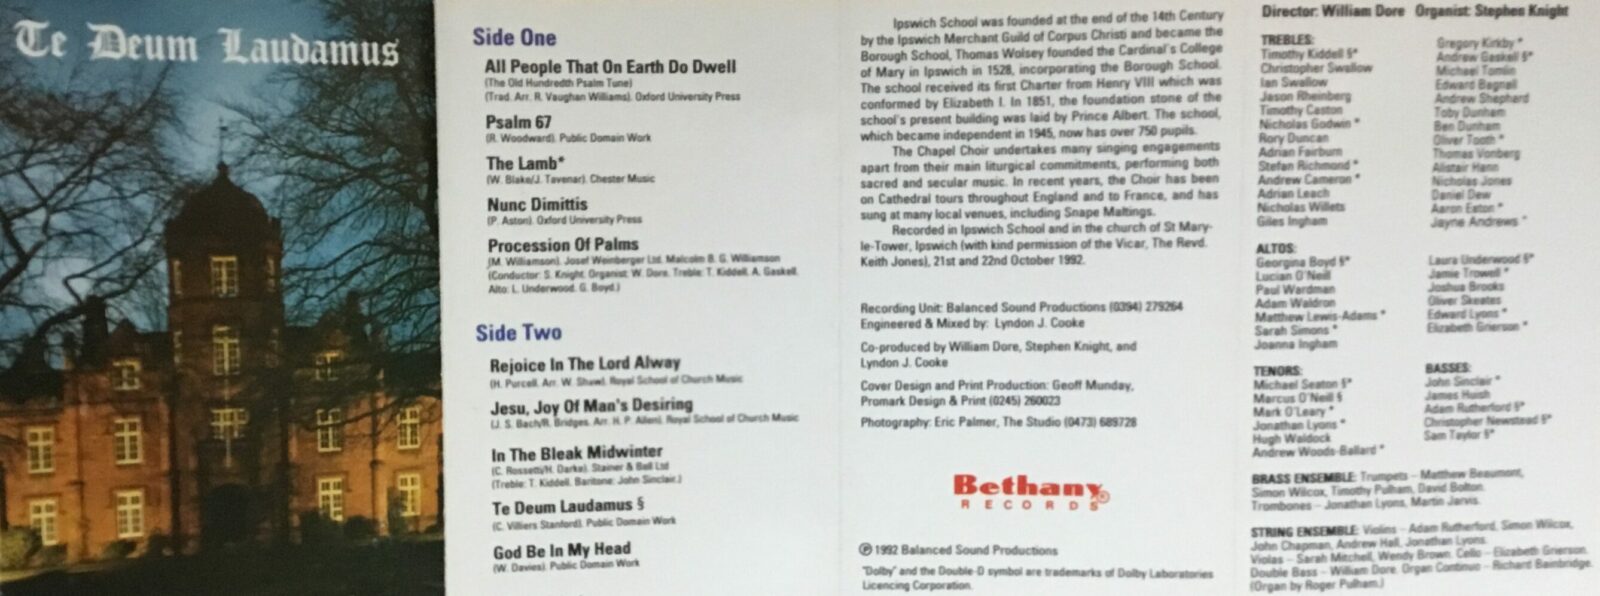 Te Deum Laudamus ISCC on Bethany Records 1992 (Cassette Cover)